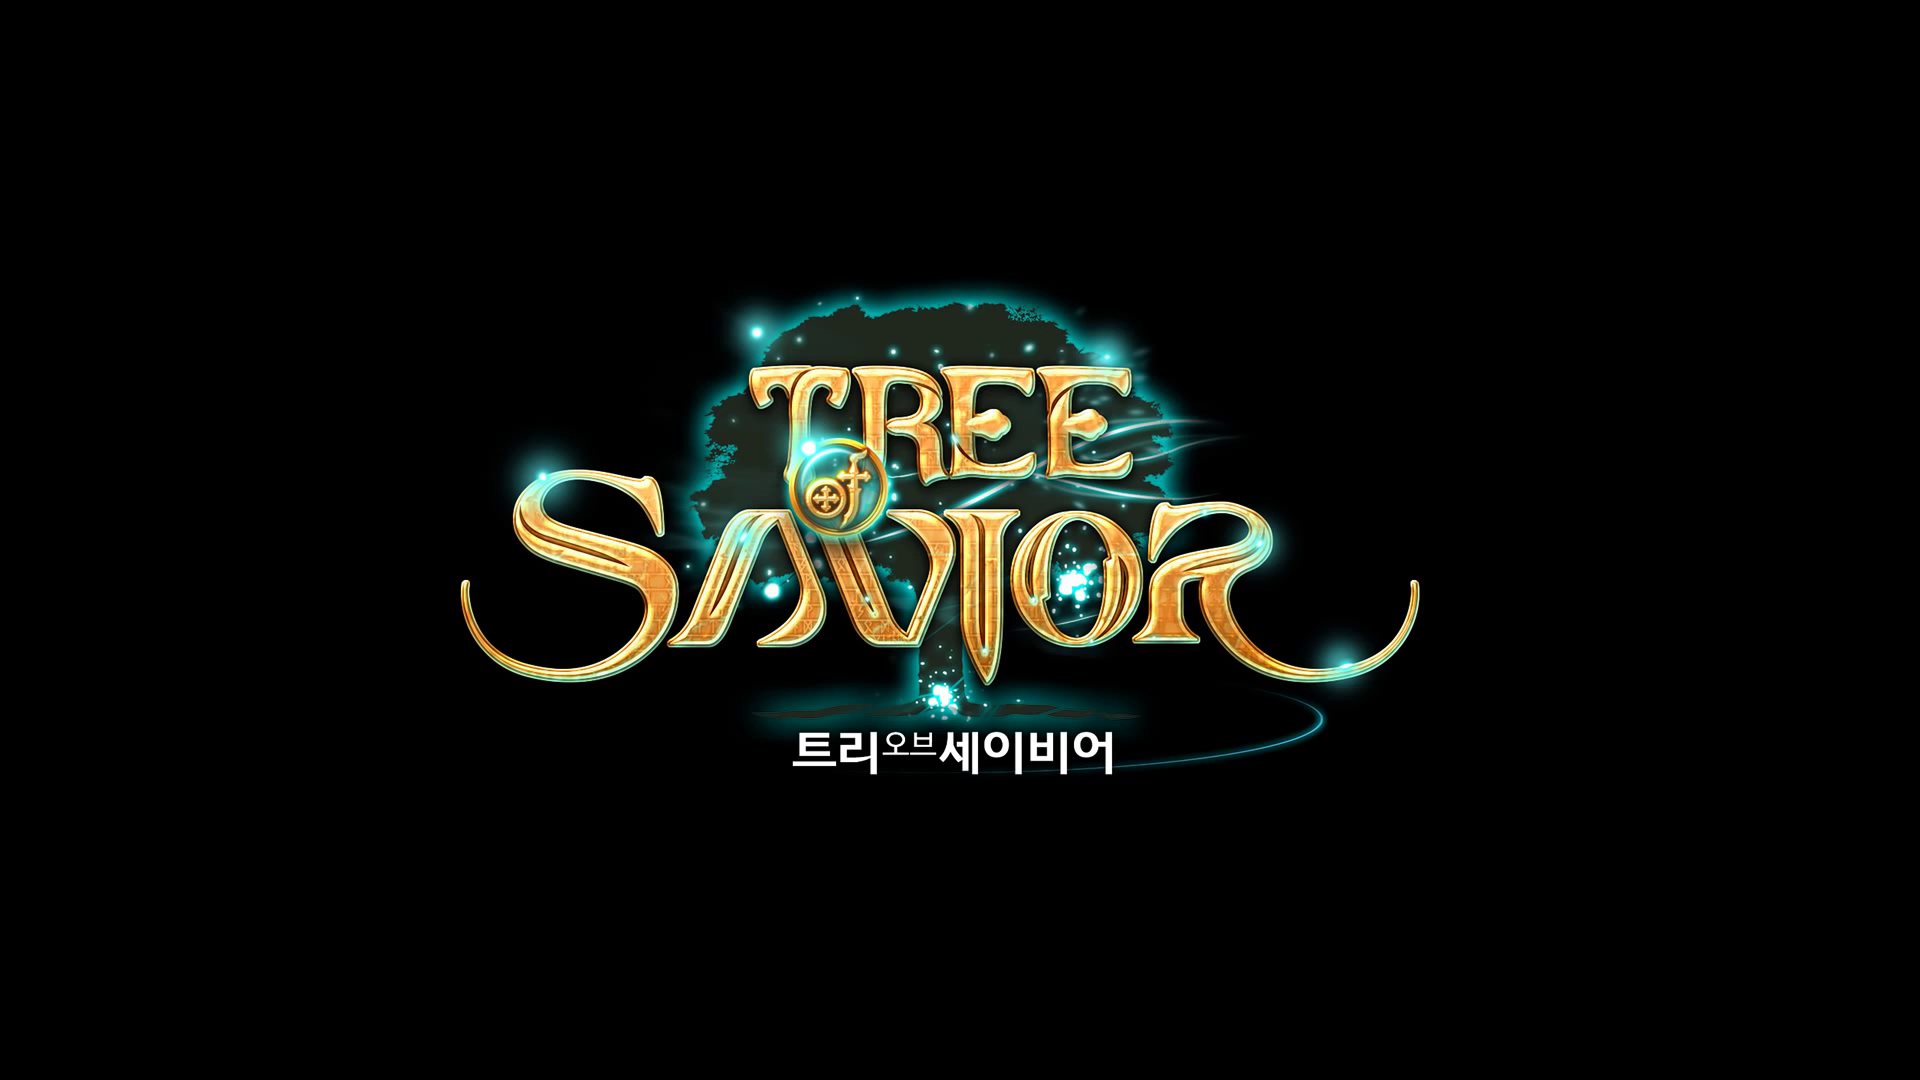 tree-of-savior-screenshot